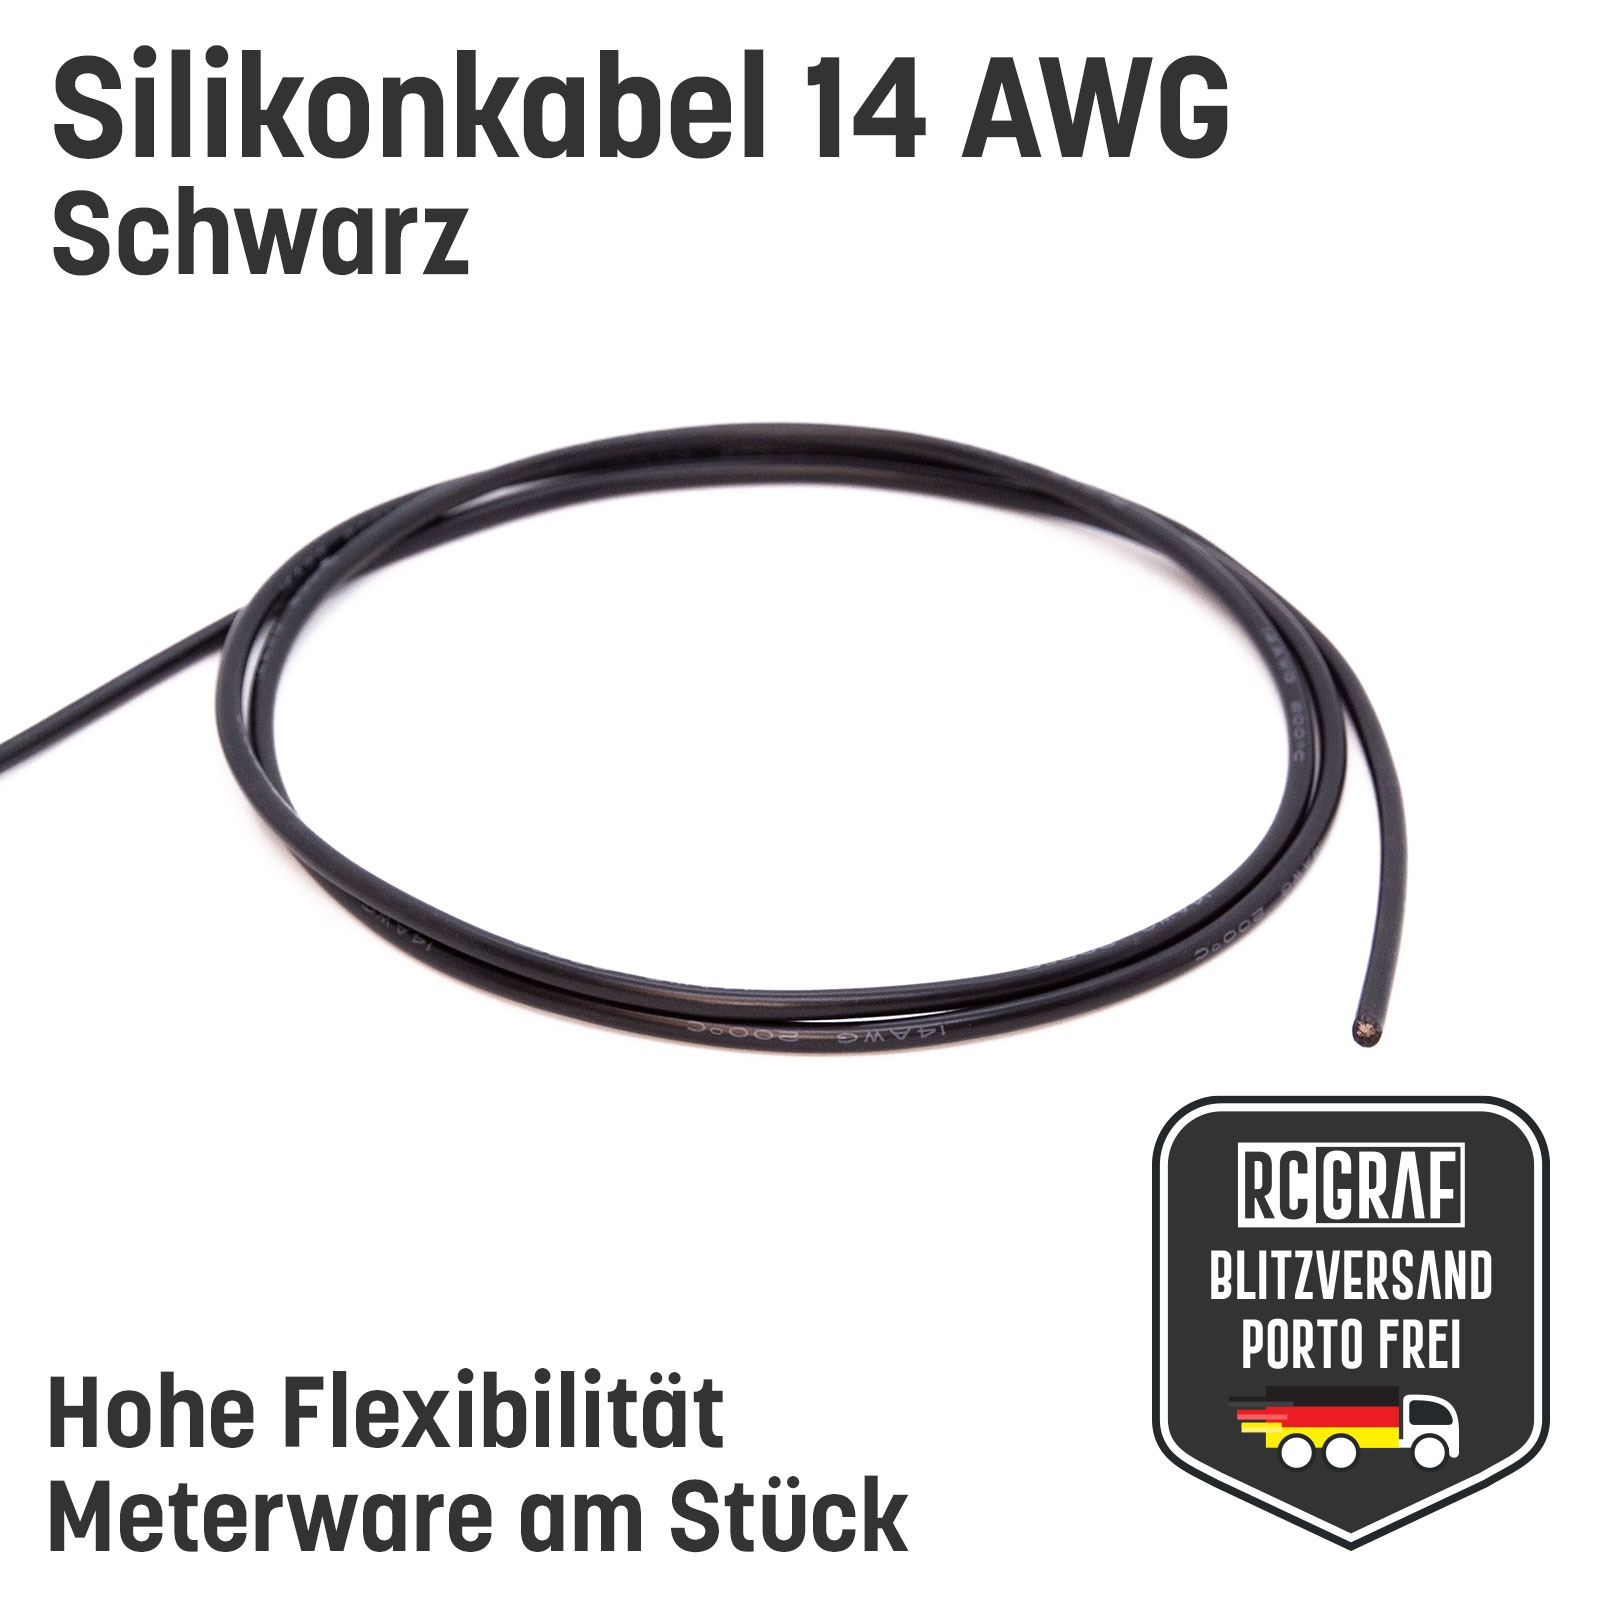 Silikonkabel 14 AWG 10 Meter Schwarz hochflexibel